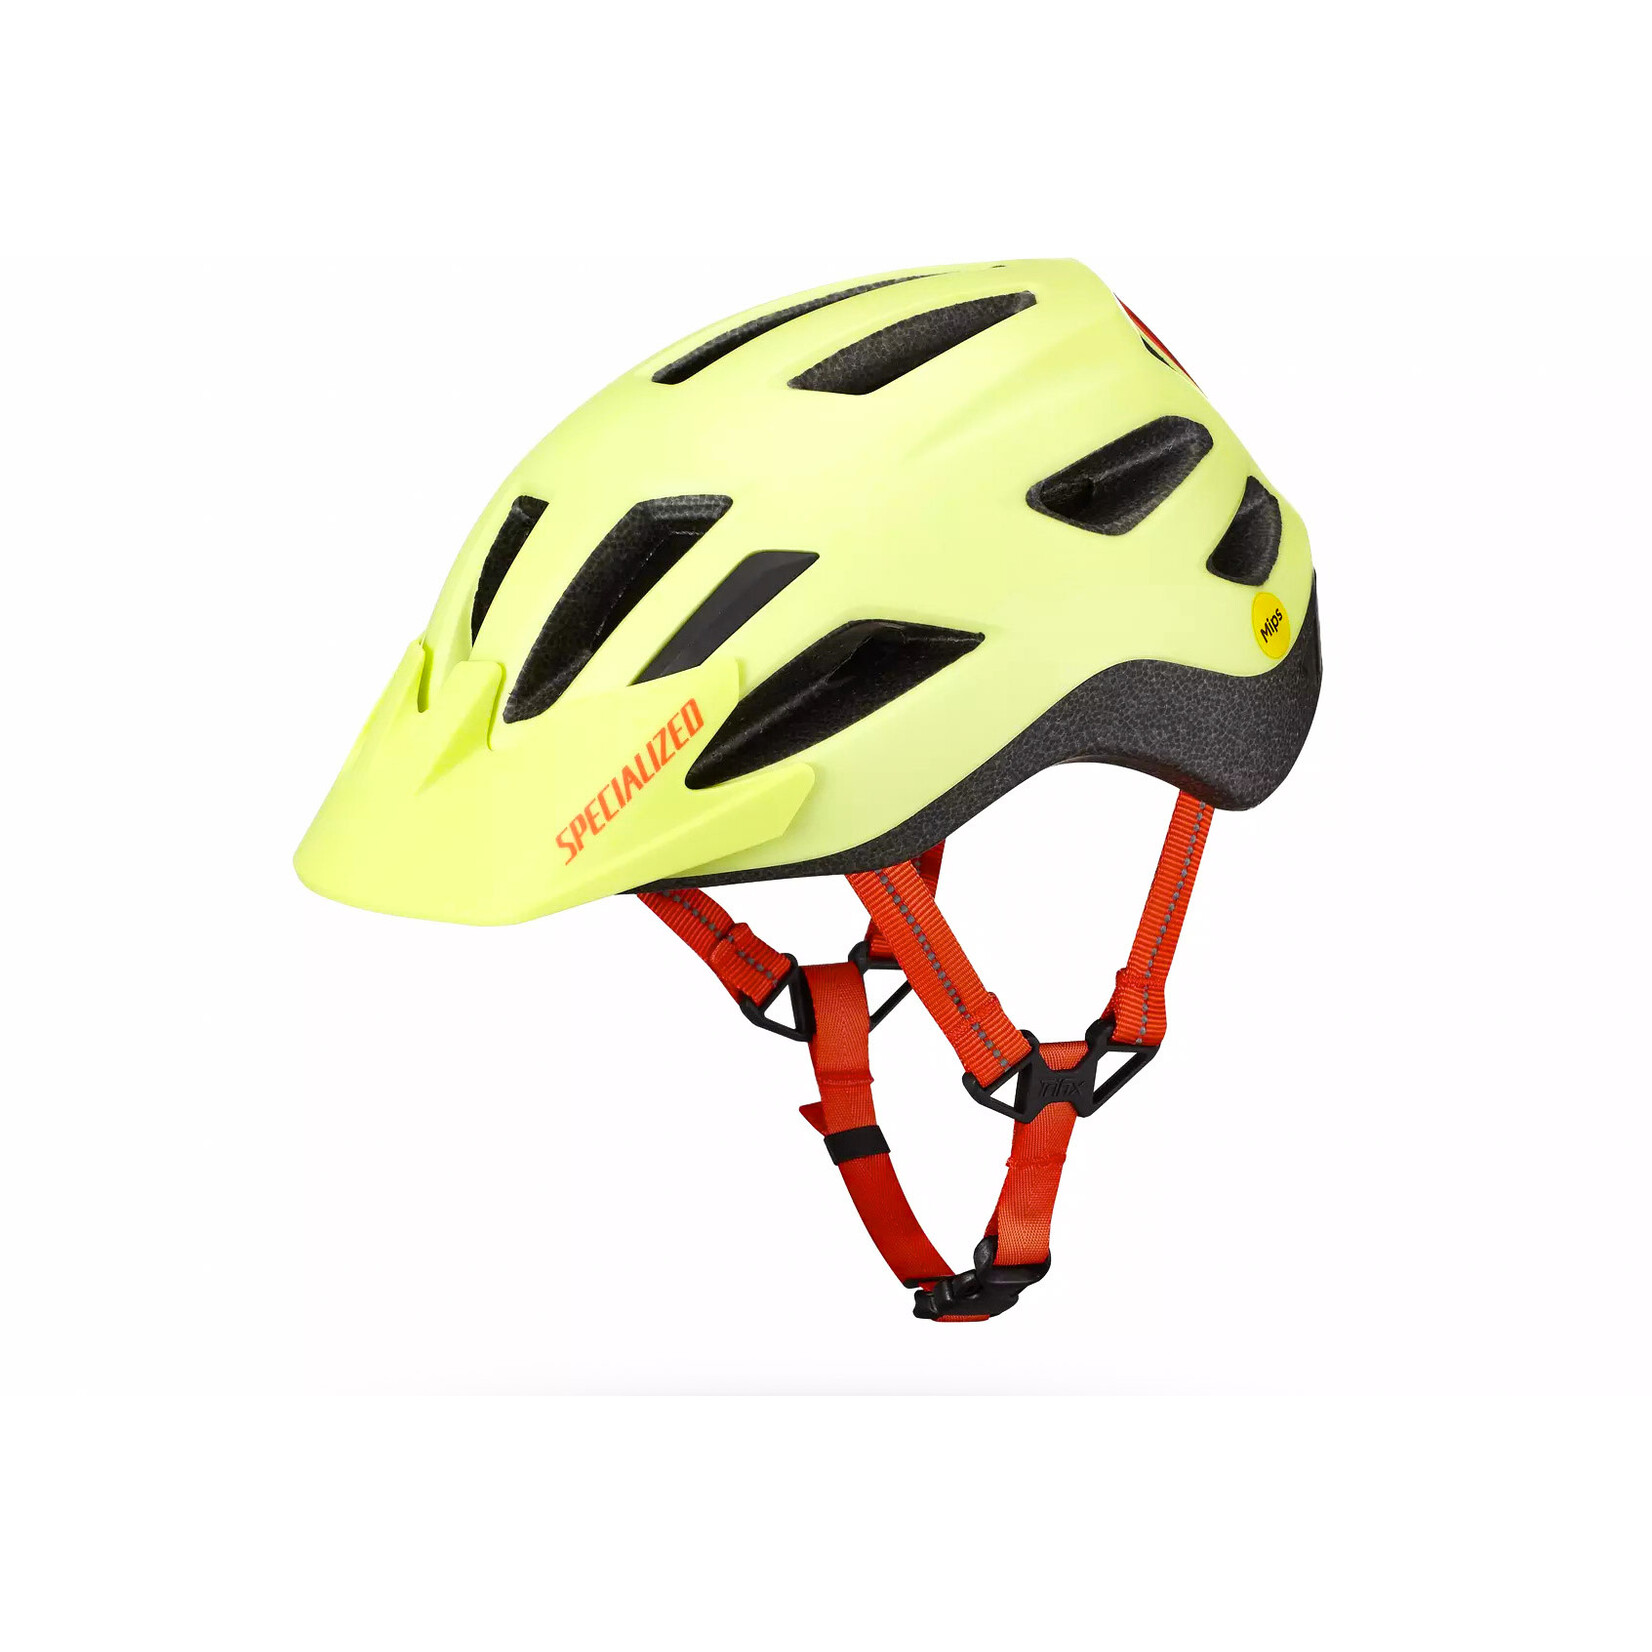 Specialized Shuffle LED MIPS Helmet, Standard Buckle